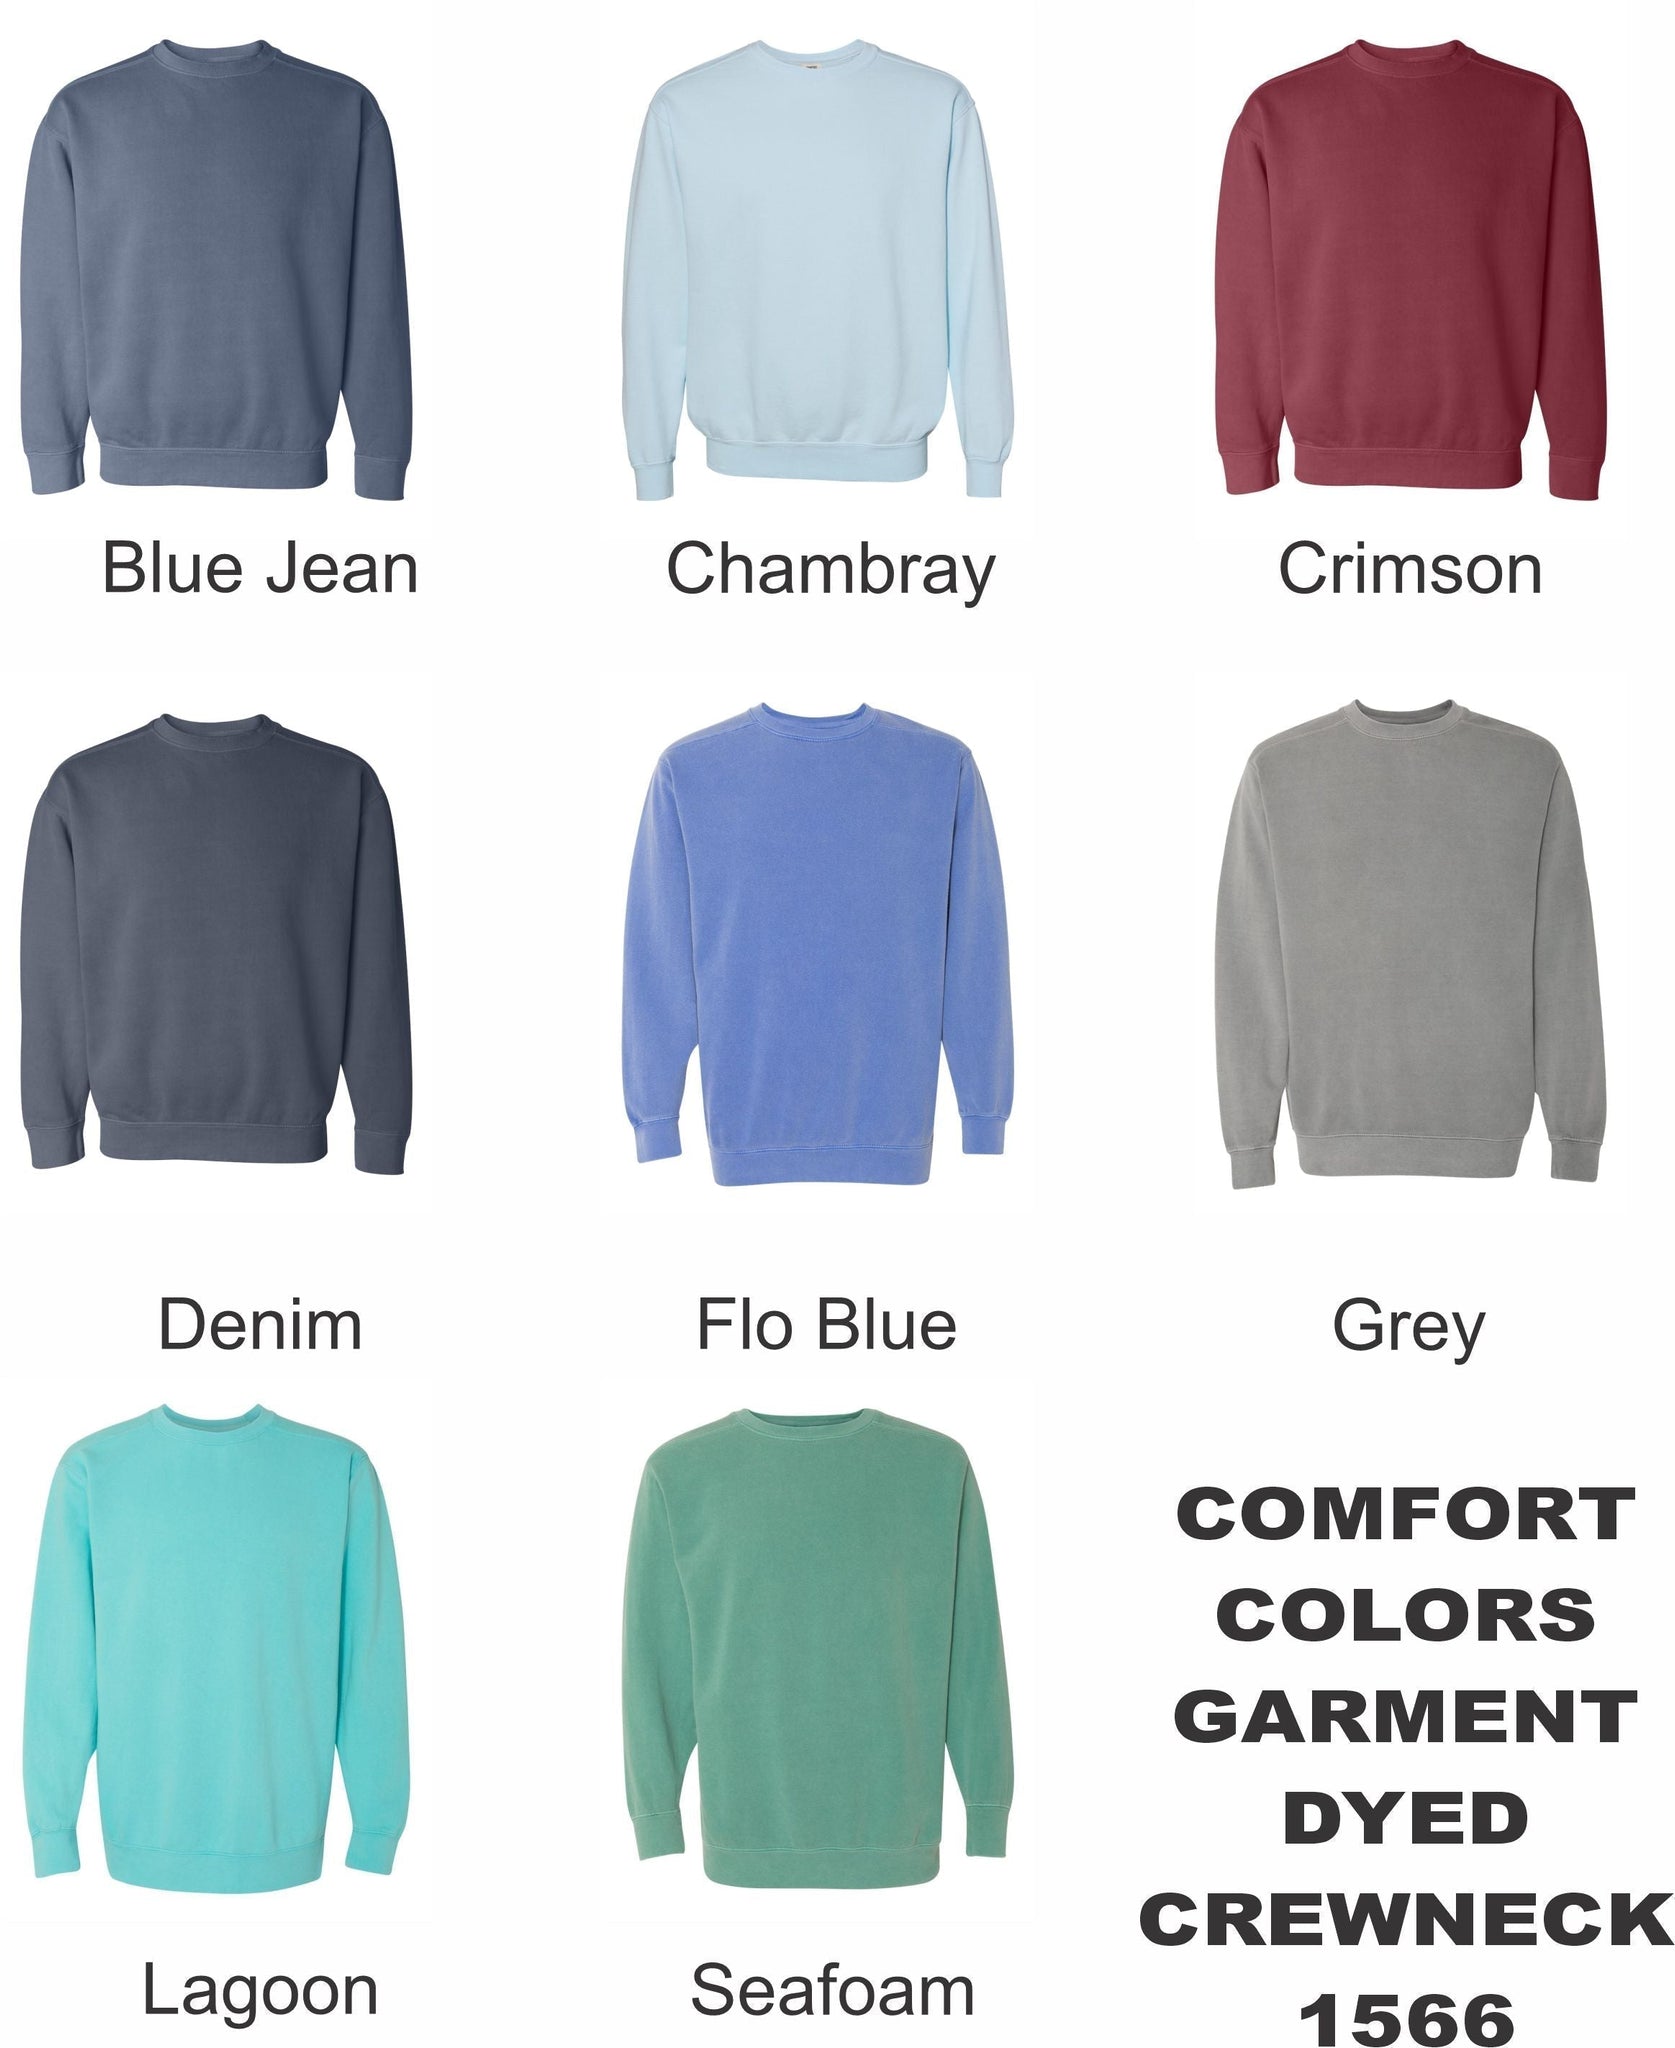 Delta Zeta Comfort Colors Garment Dyed Crewneck w/Embroidered